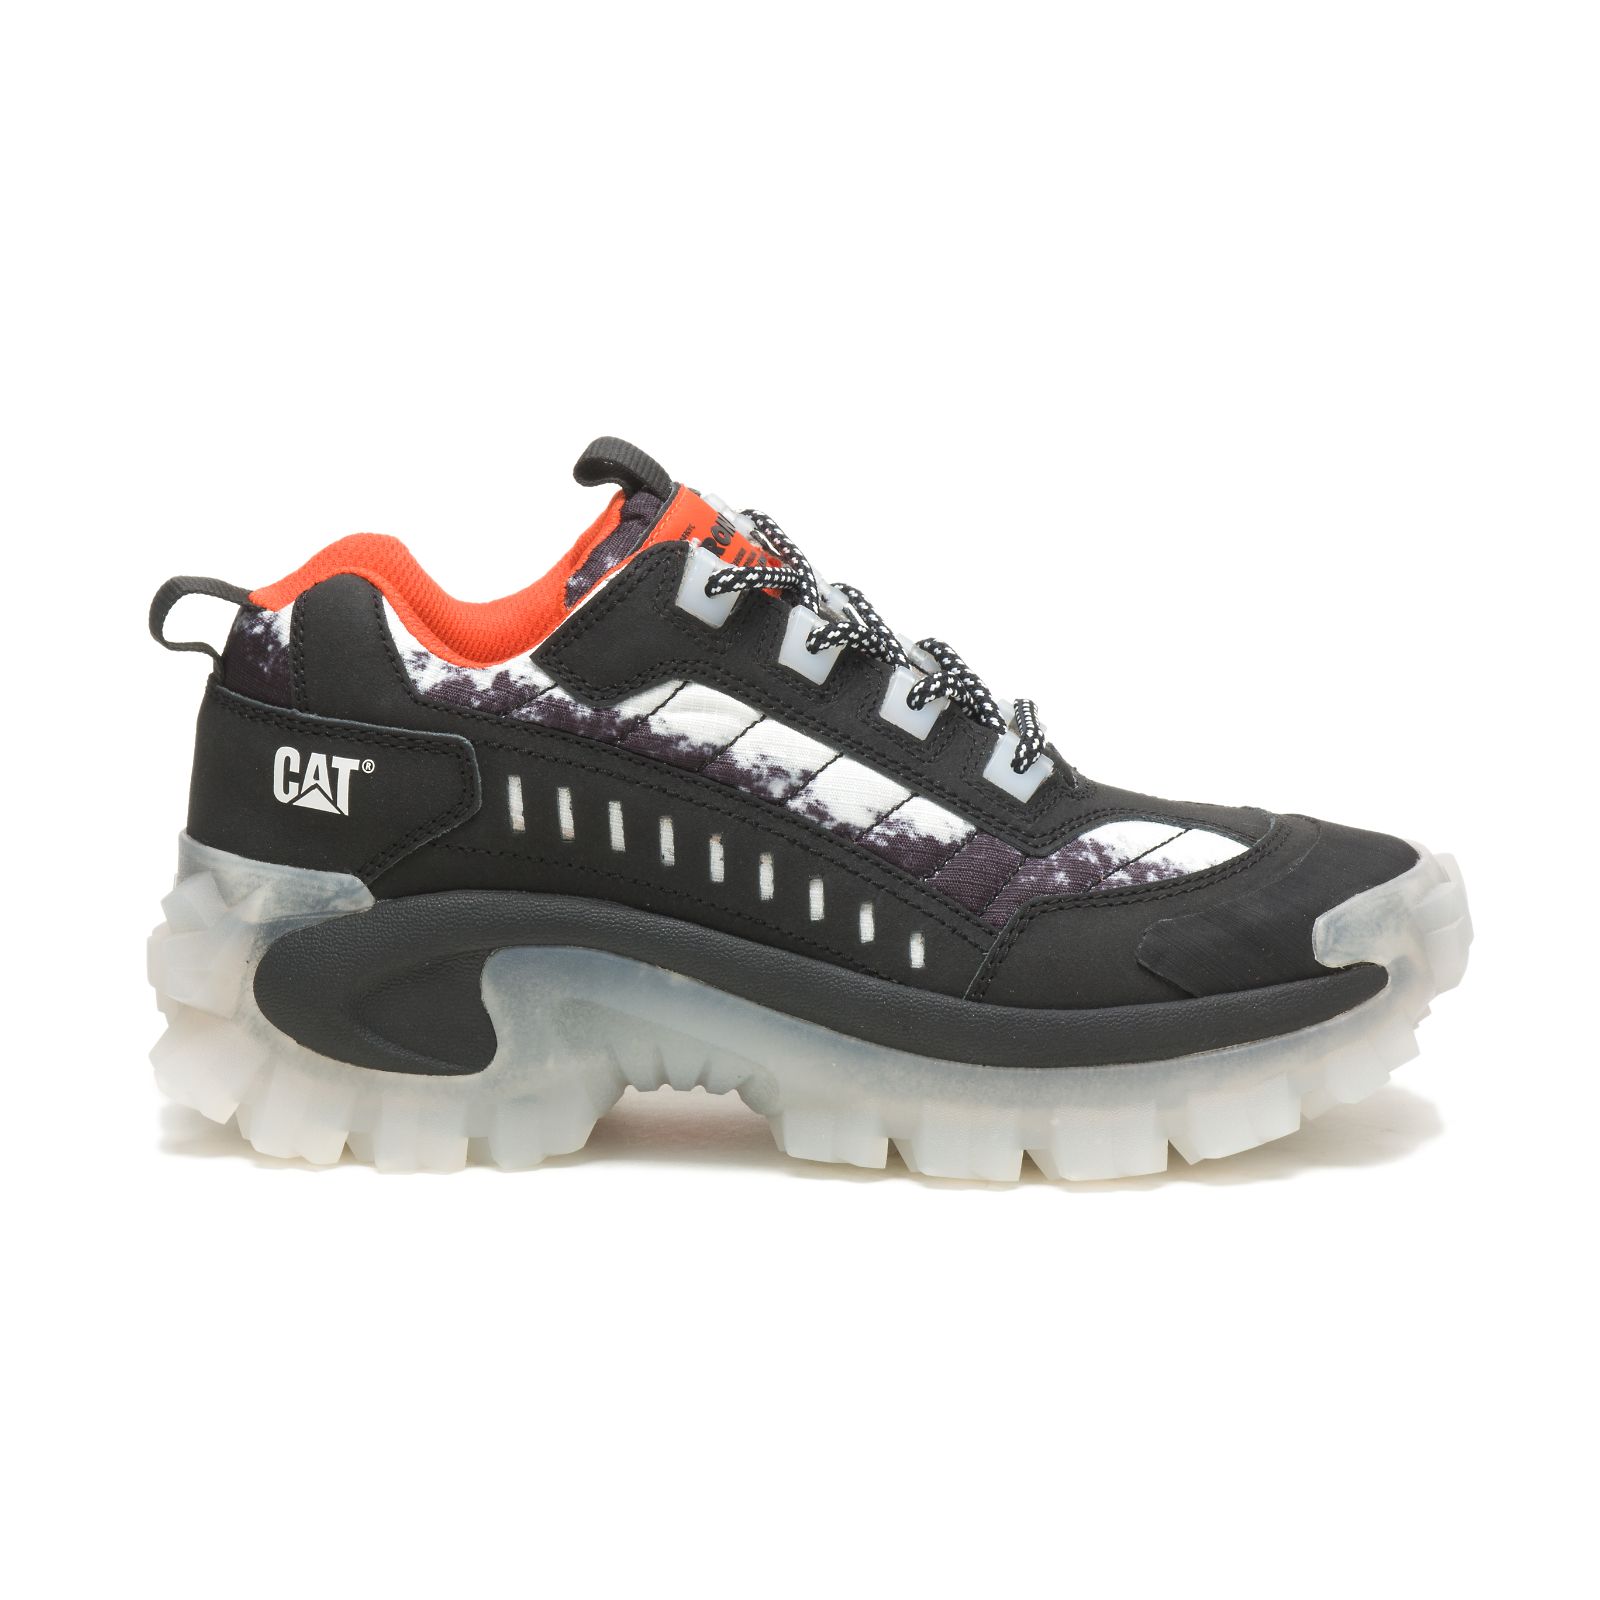 Caterpillar Sneakers Online UAE - Caterpillar Heron Preston X Cat Intruder Mens - Black LEJWVK562